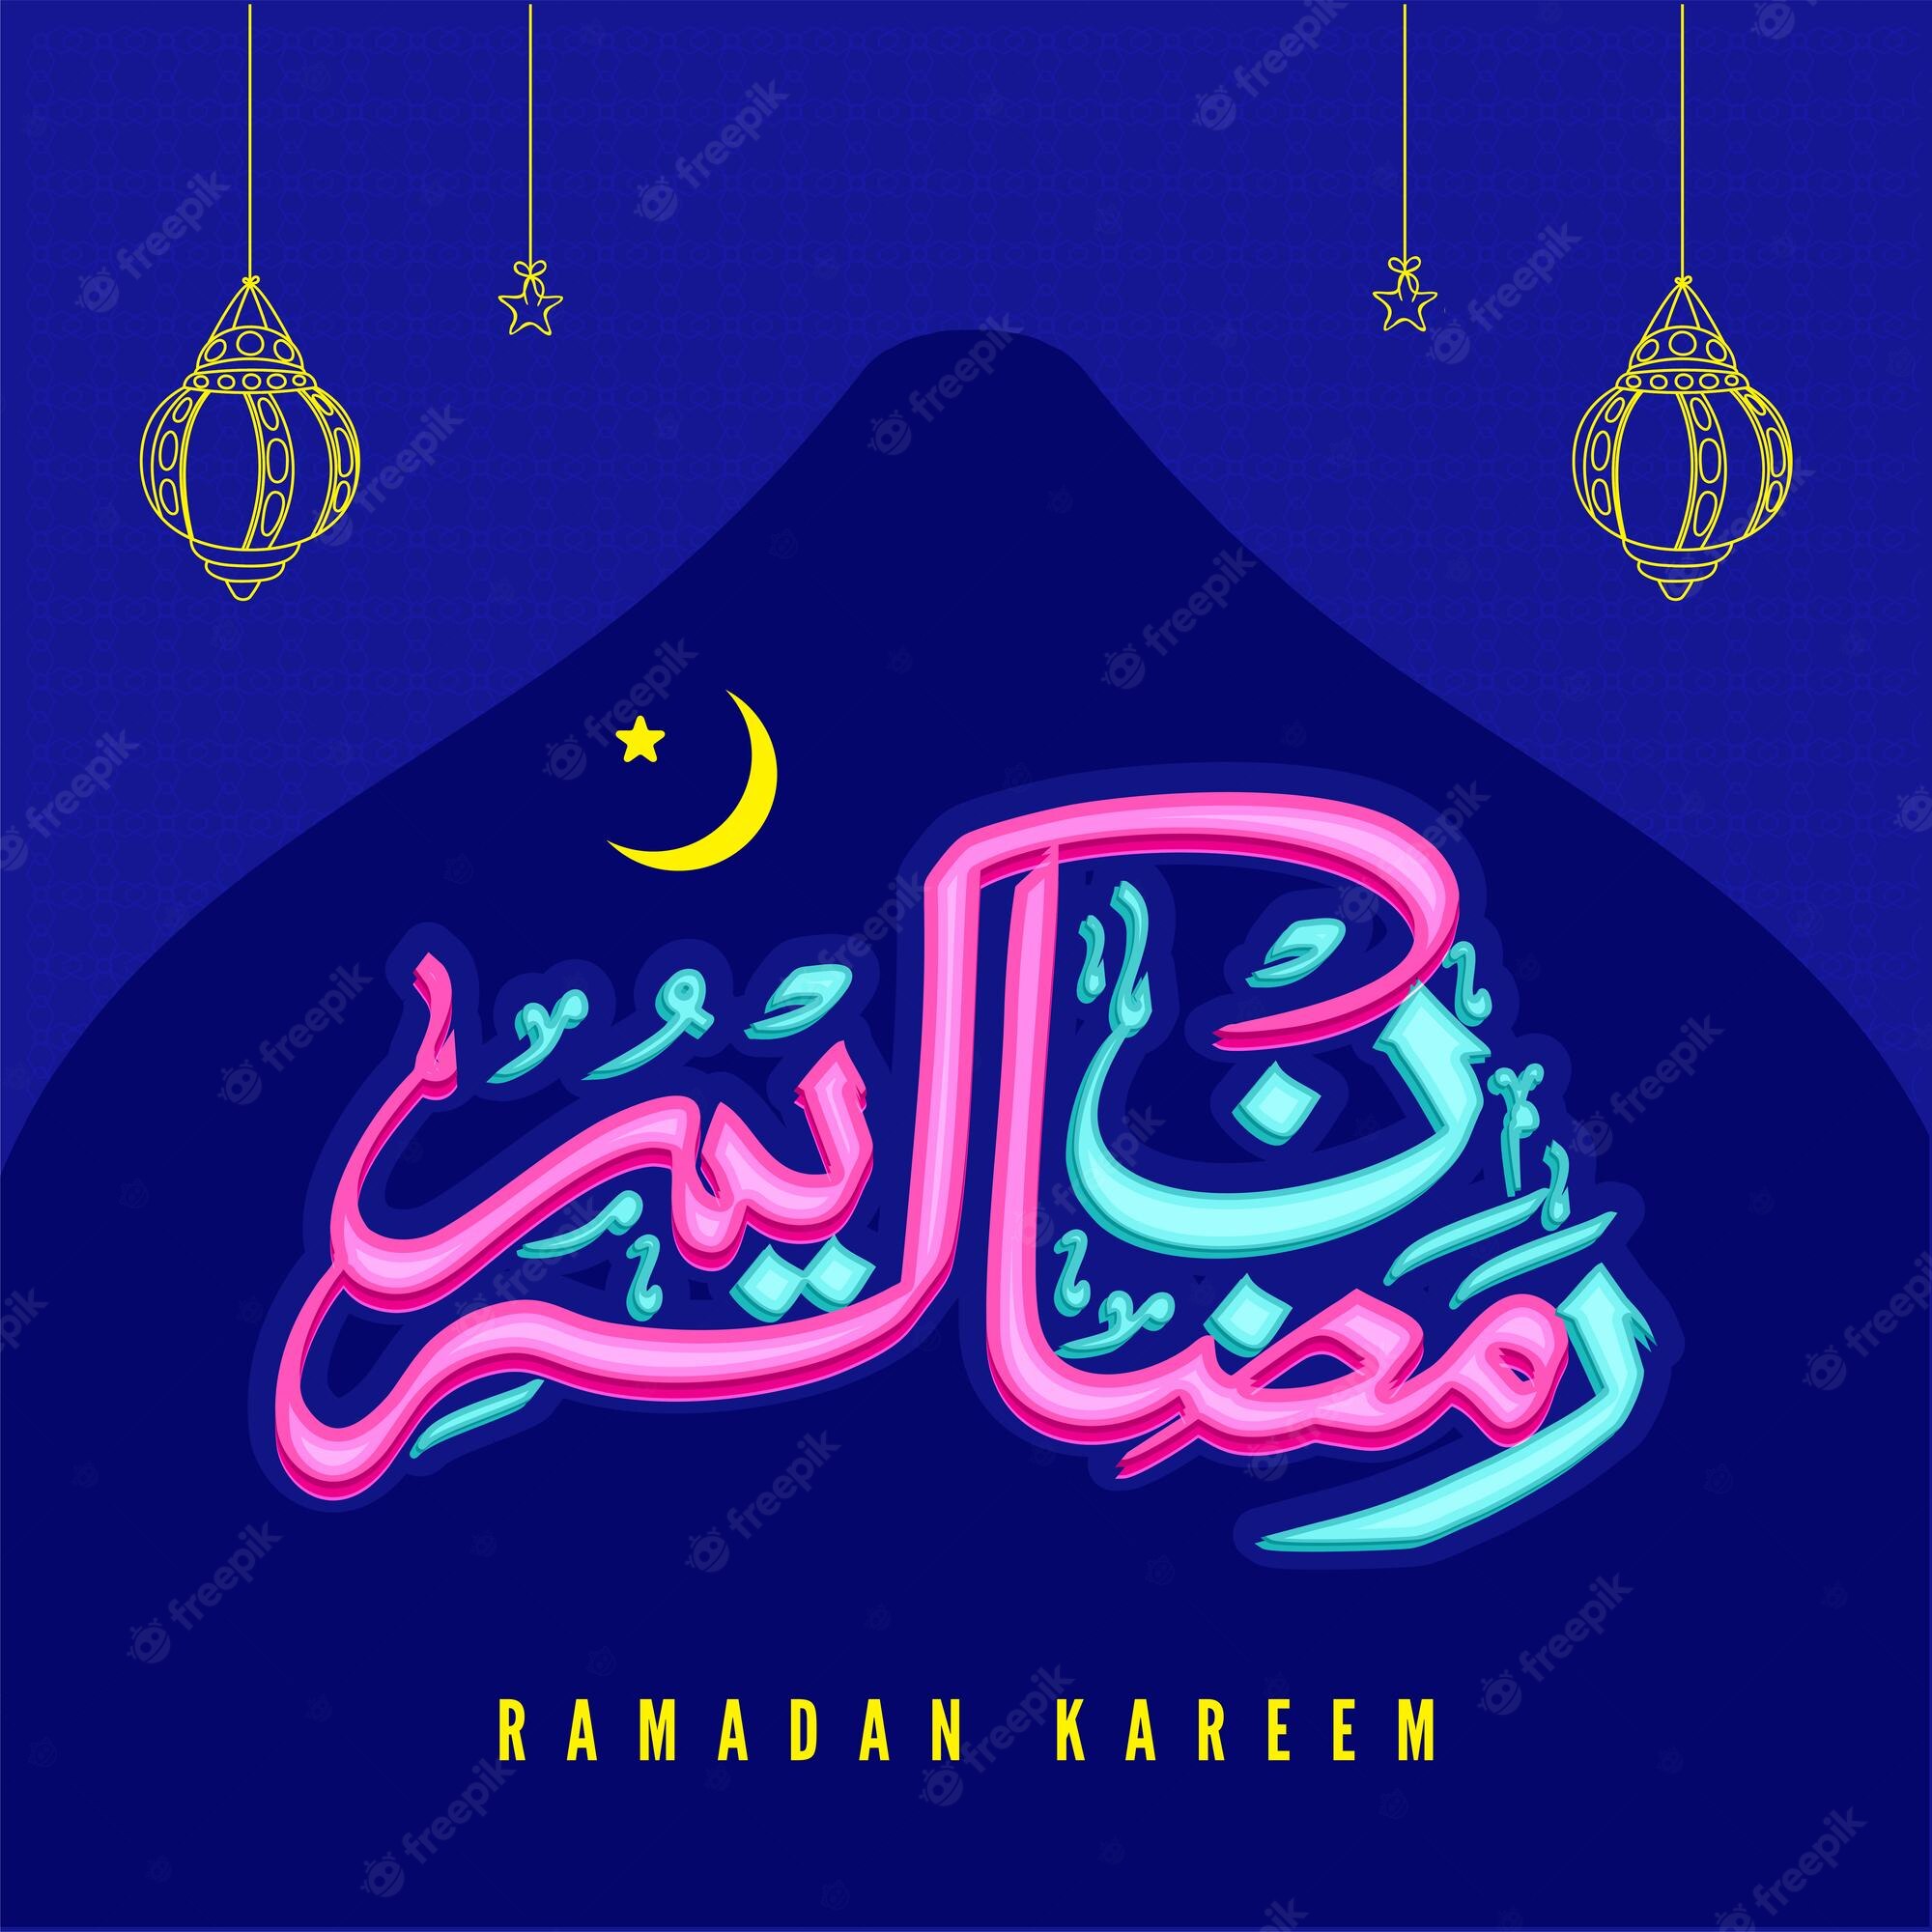 Premium Vector. Ramadan kareem calligraphy in arabic language with crescent moon stars and lanterns hang on blue background